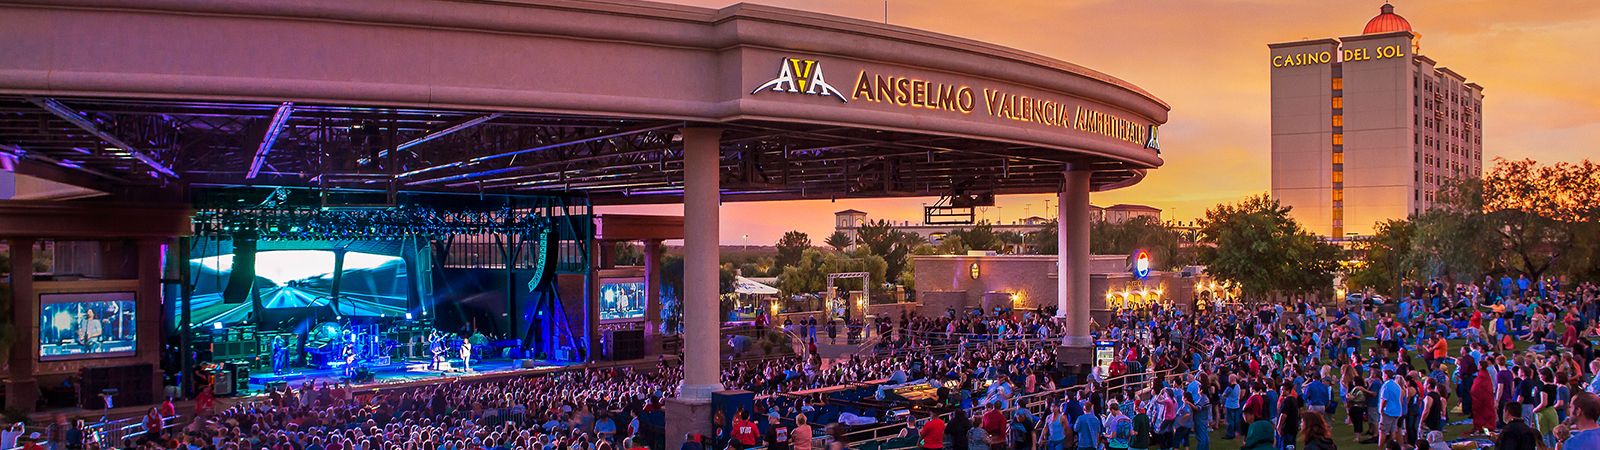 AVA Amphitheater Concerts at Casino Del Sol Tucson AZ